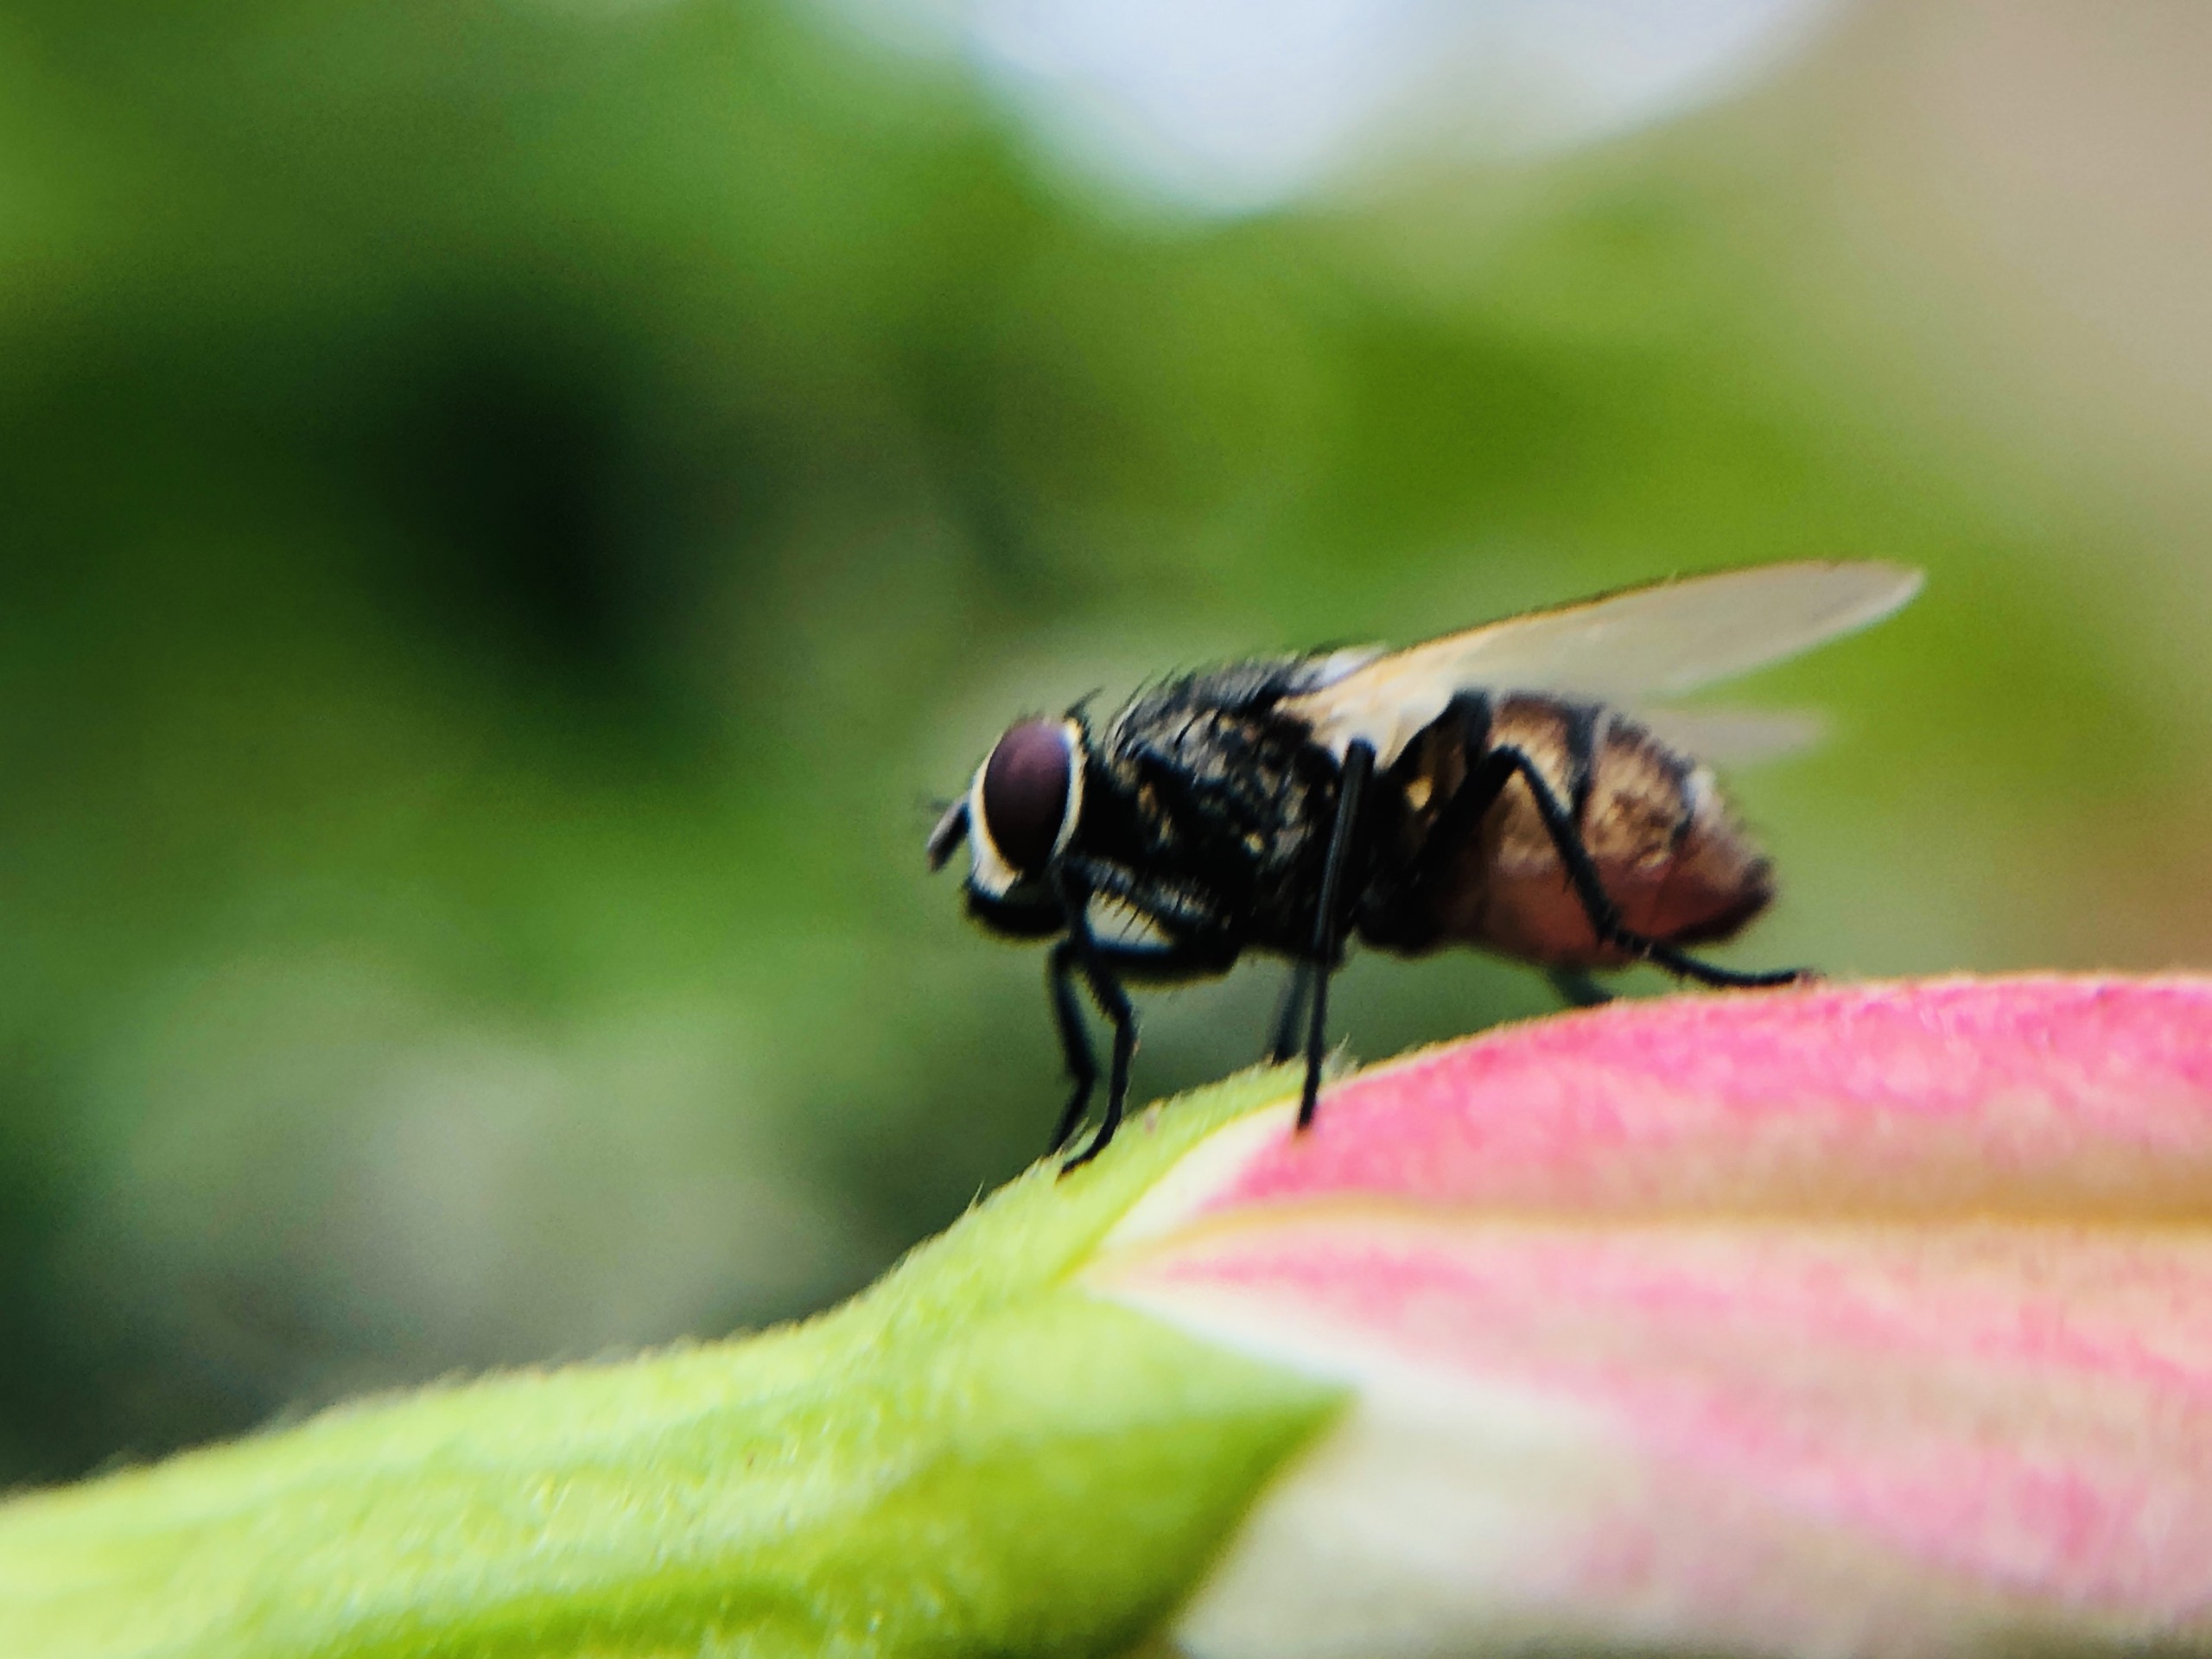 A Housefly